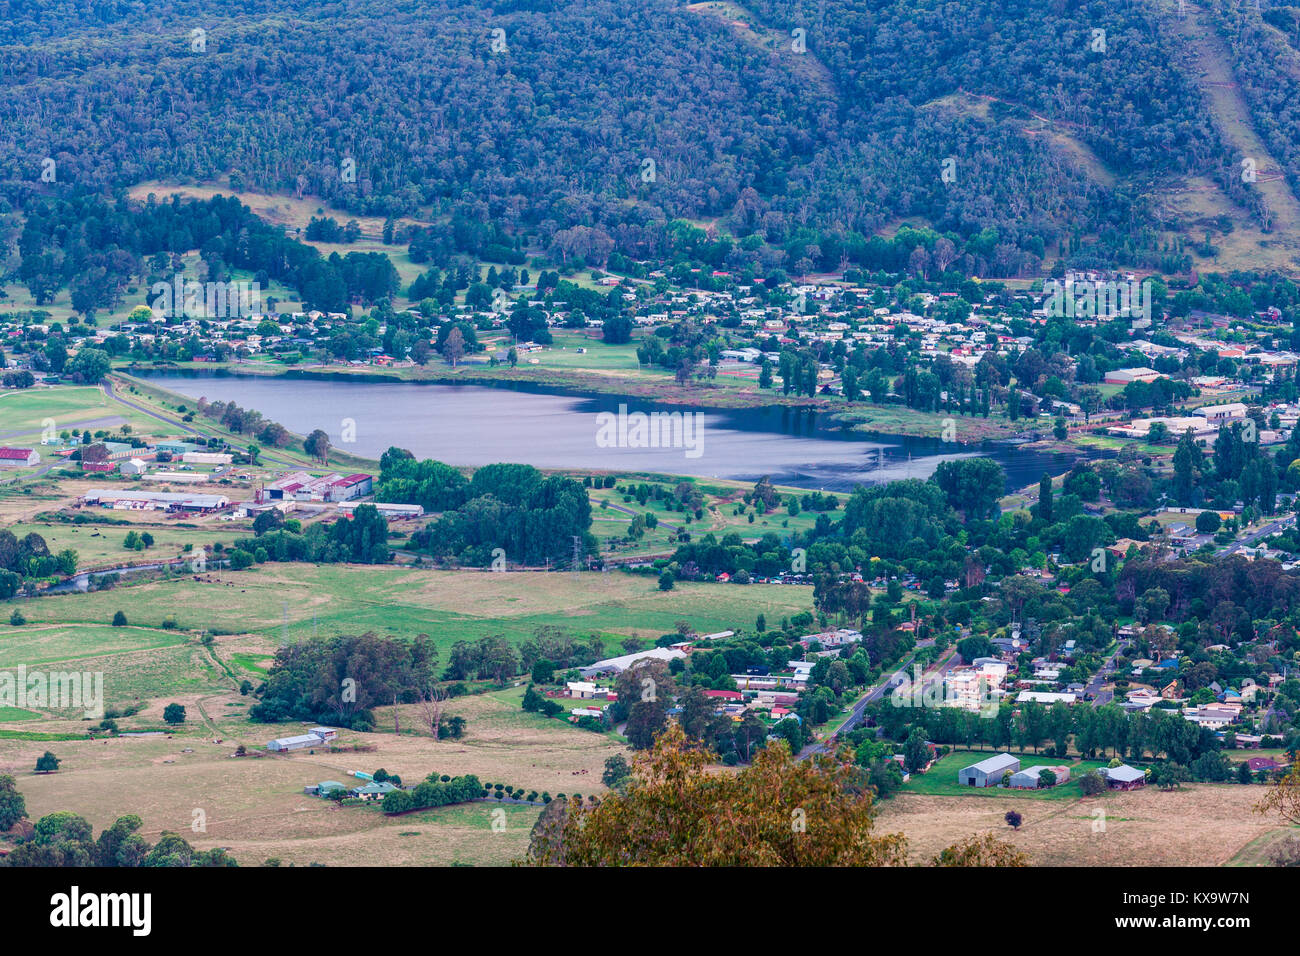 Mount Beauty pondage - aerial view. Victoria, Australia Stock Photo